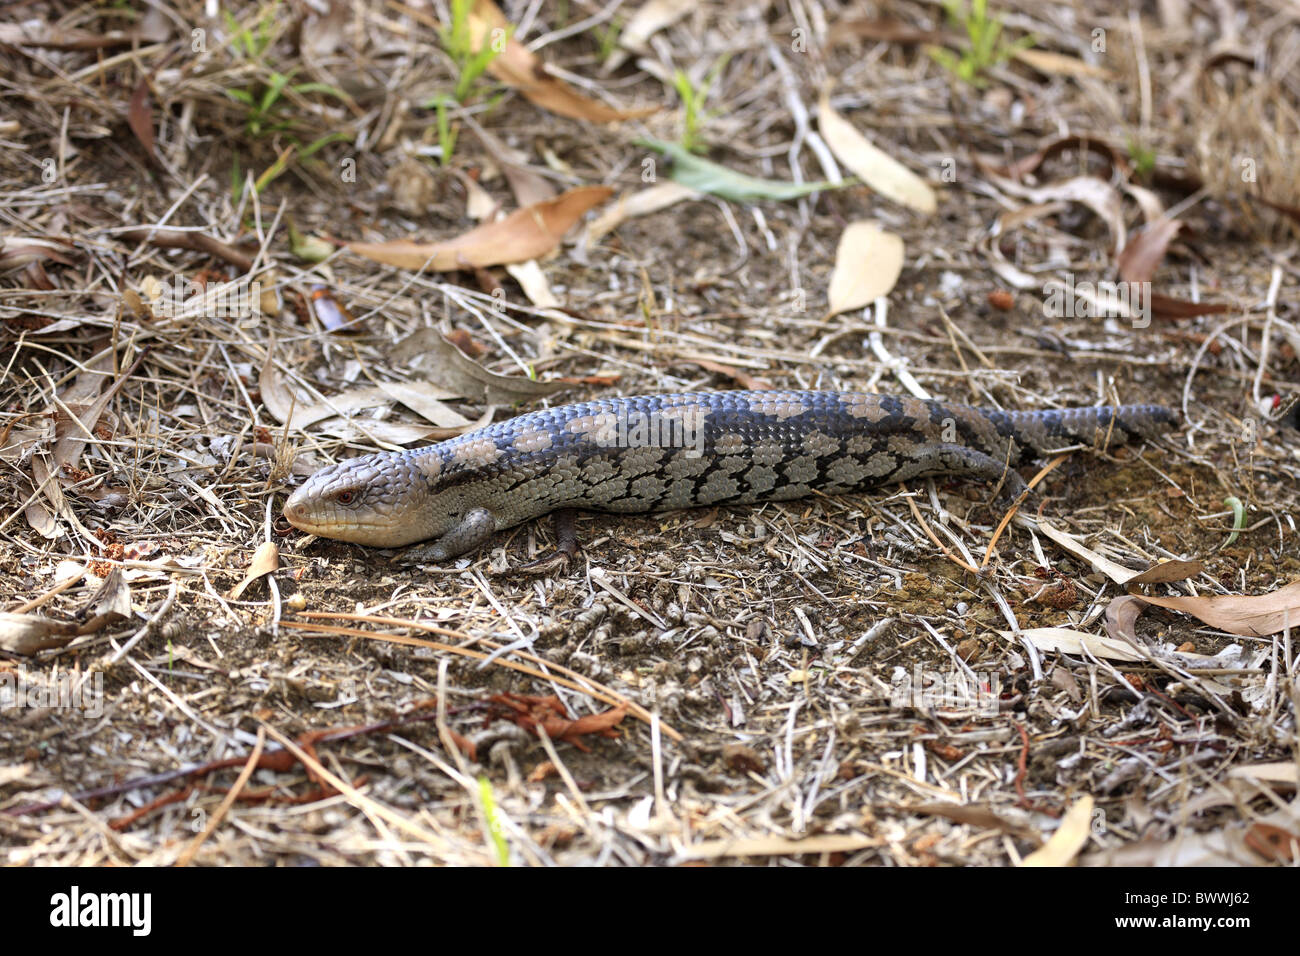 auf Boden - on ground skink skinks reptile reptiles lizard lizards animal animals wildlife nature australia australian Stock Photo